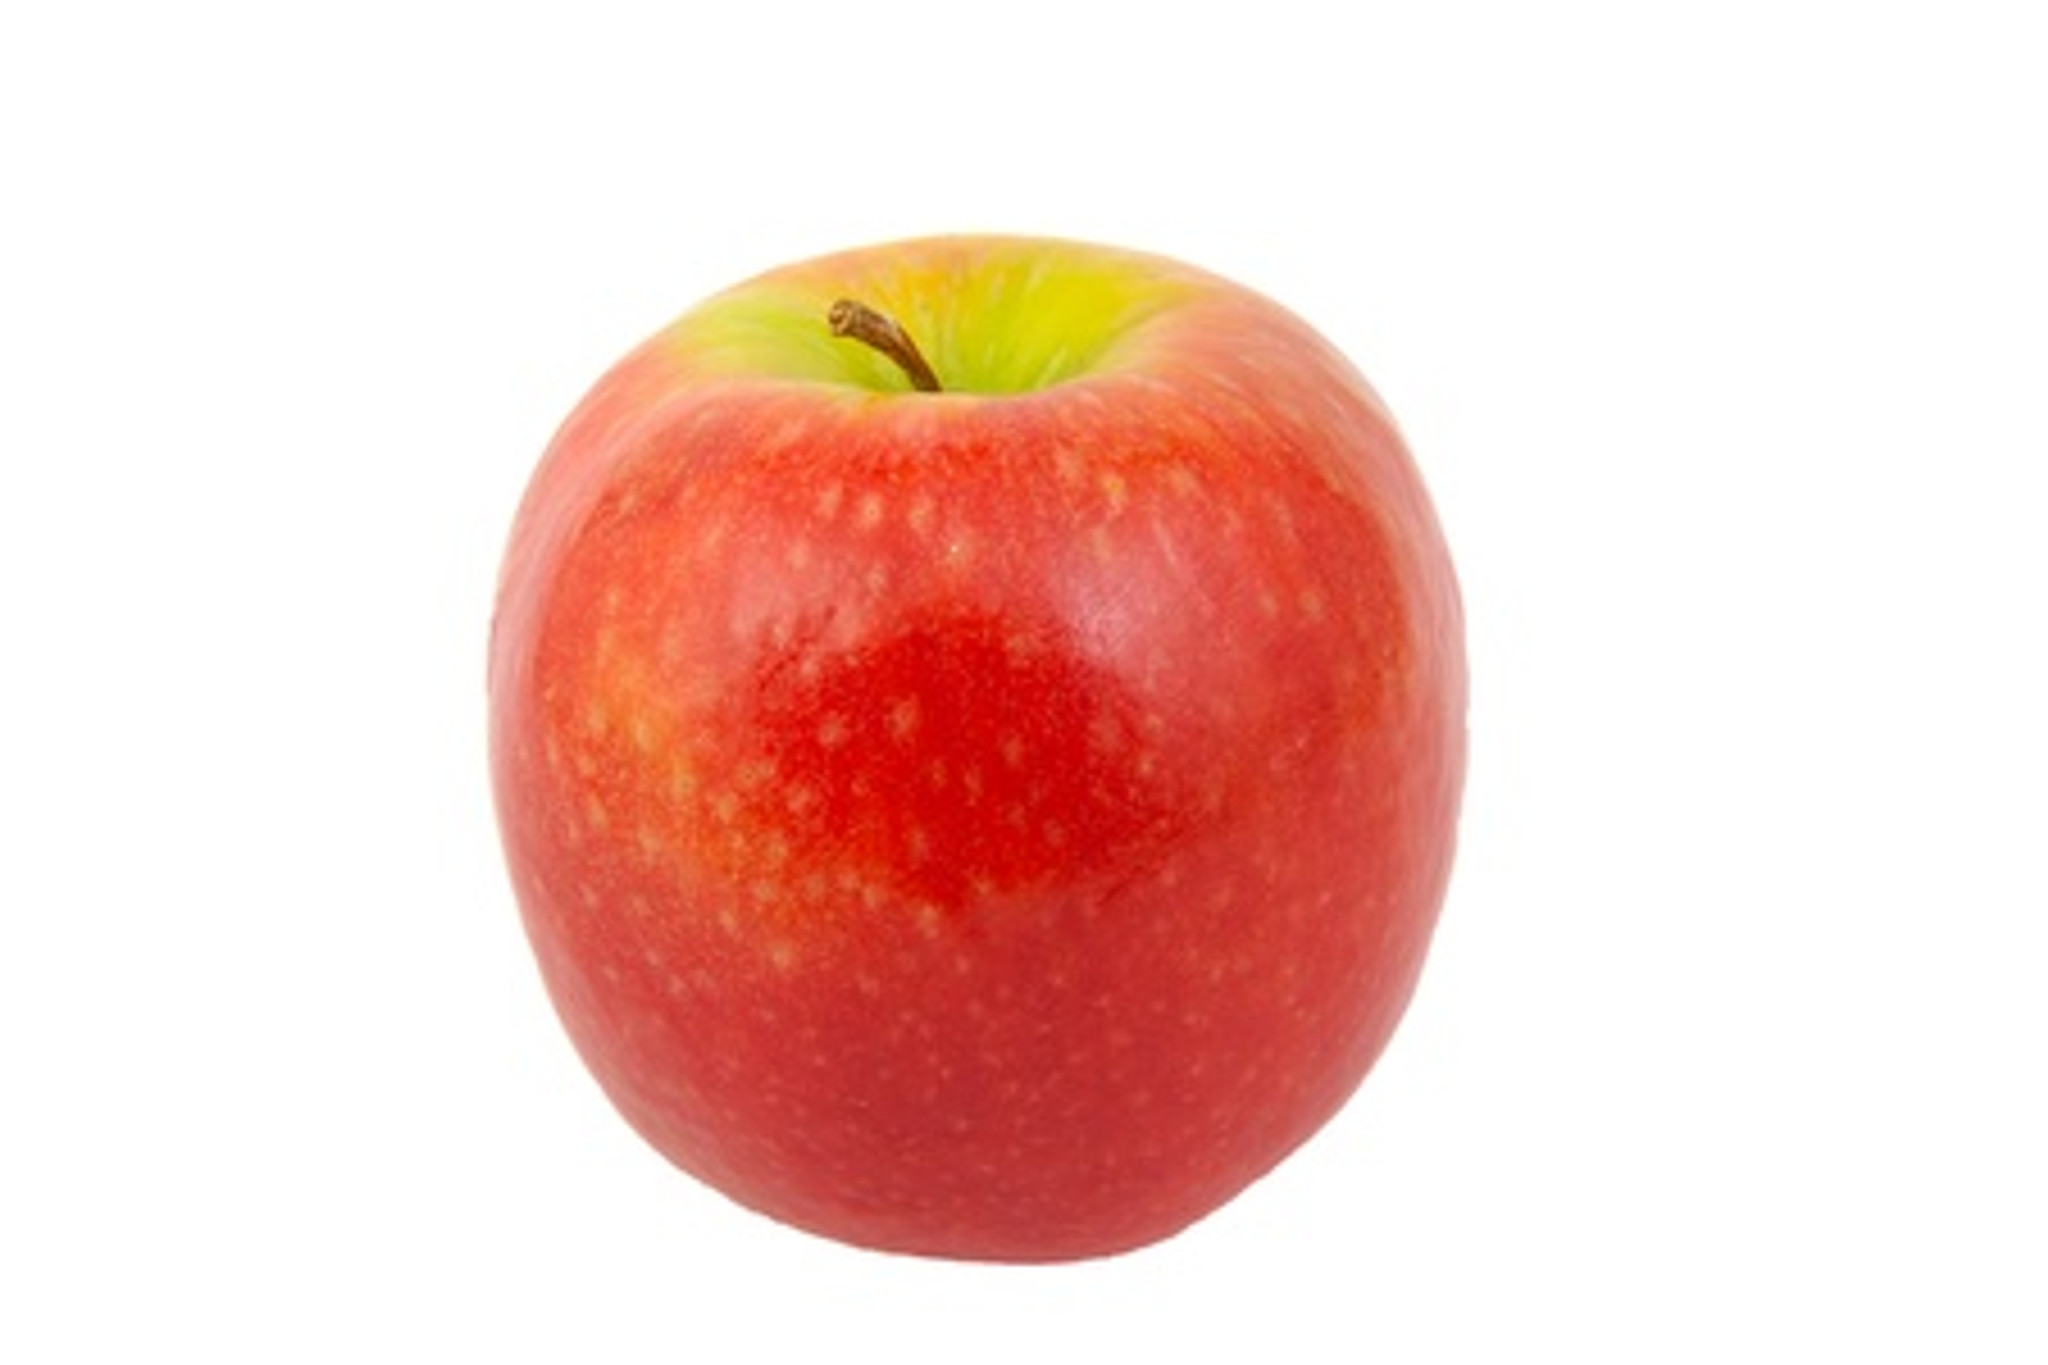 Organic Cripps Pink Apples  Buy Cripps Pink Apples Online